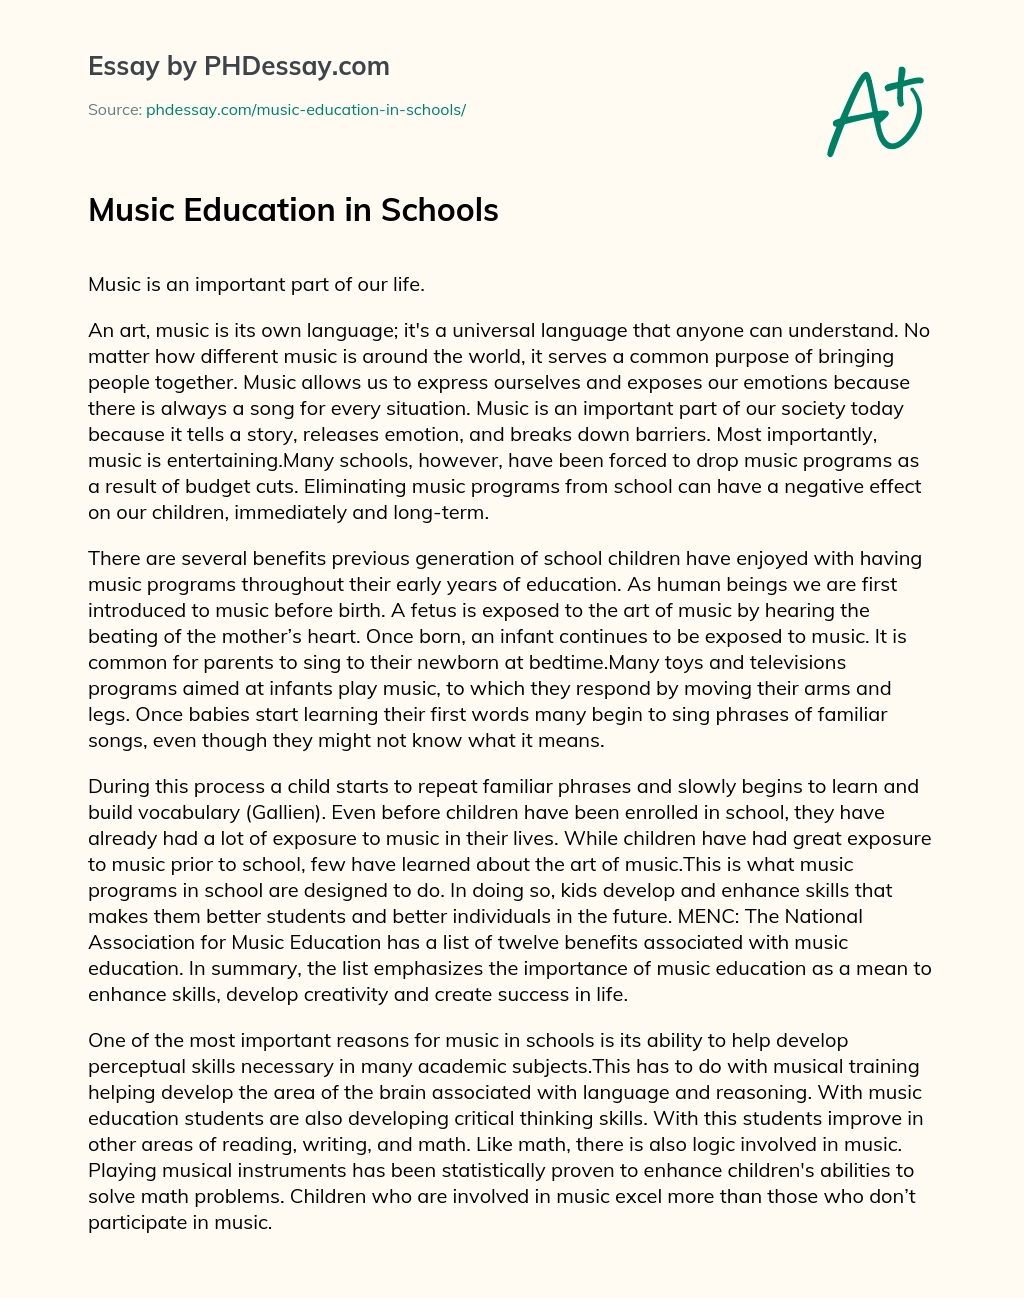 Music Education In Schools Essay Example - PHDessay.com